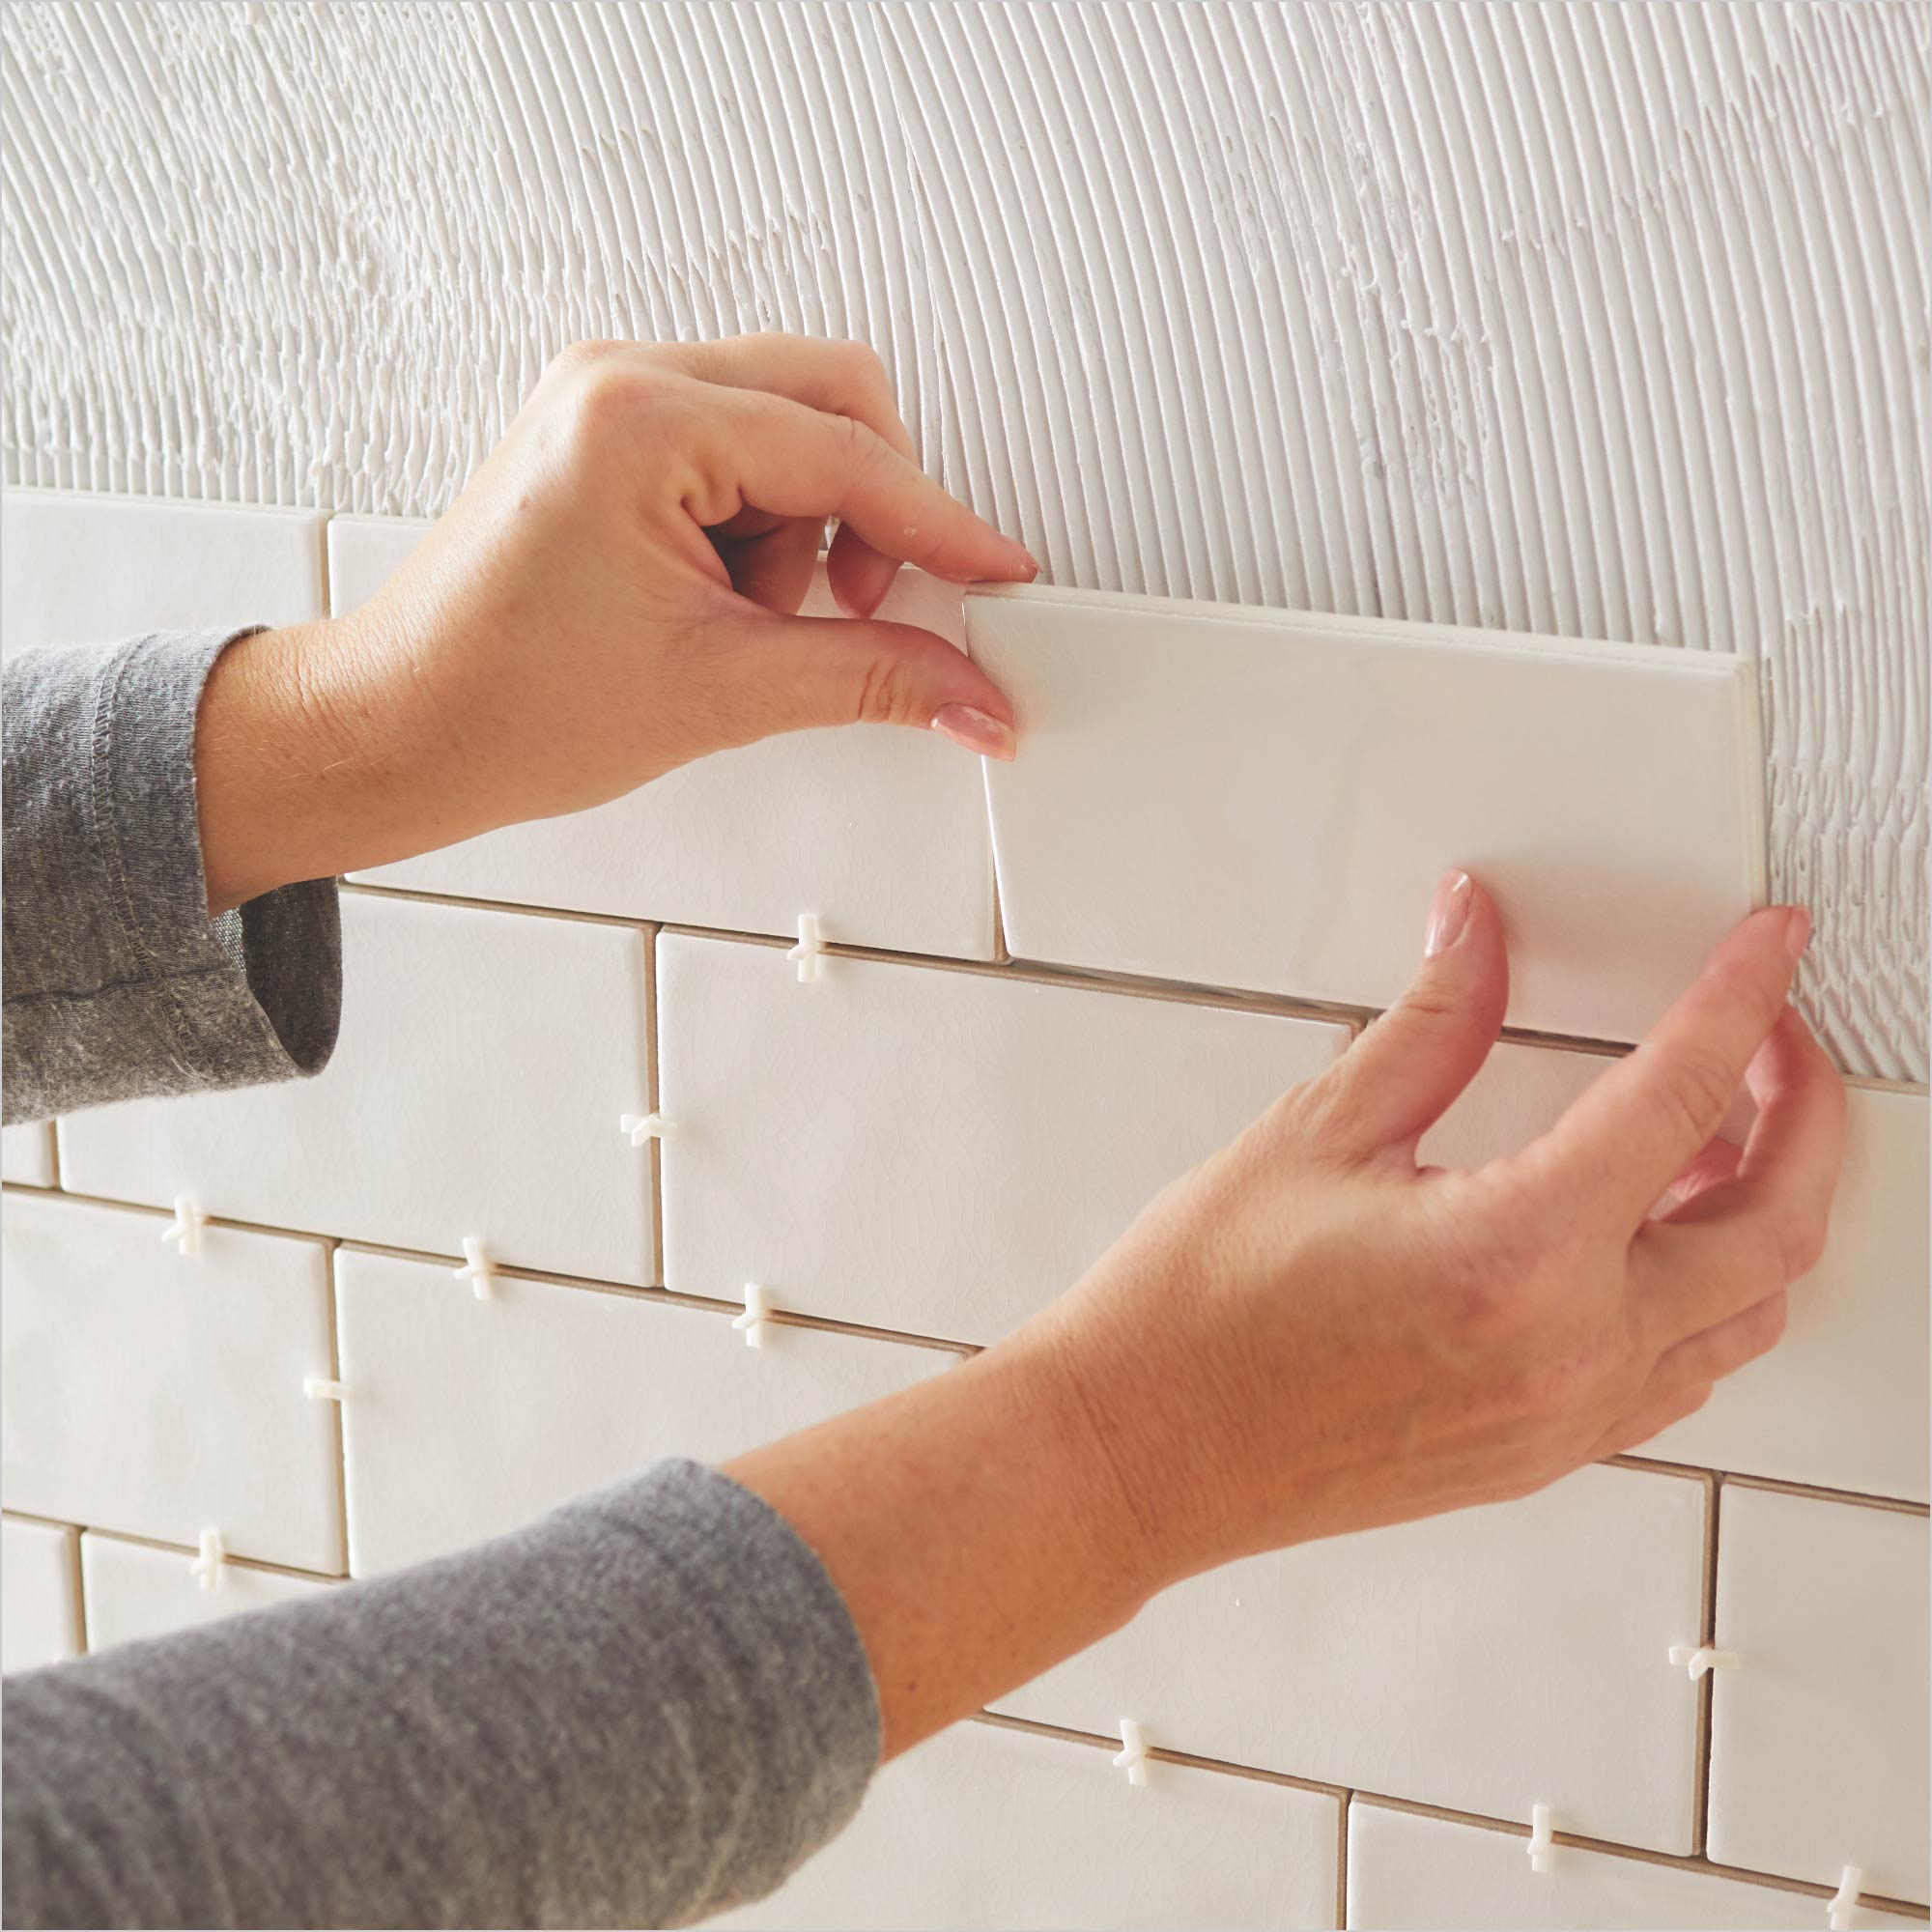 A person applies tile to a wall.